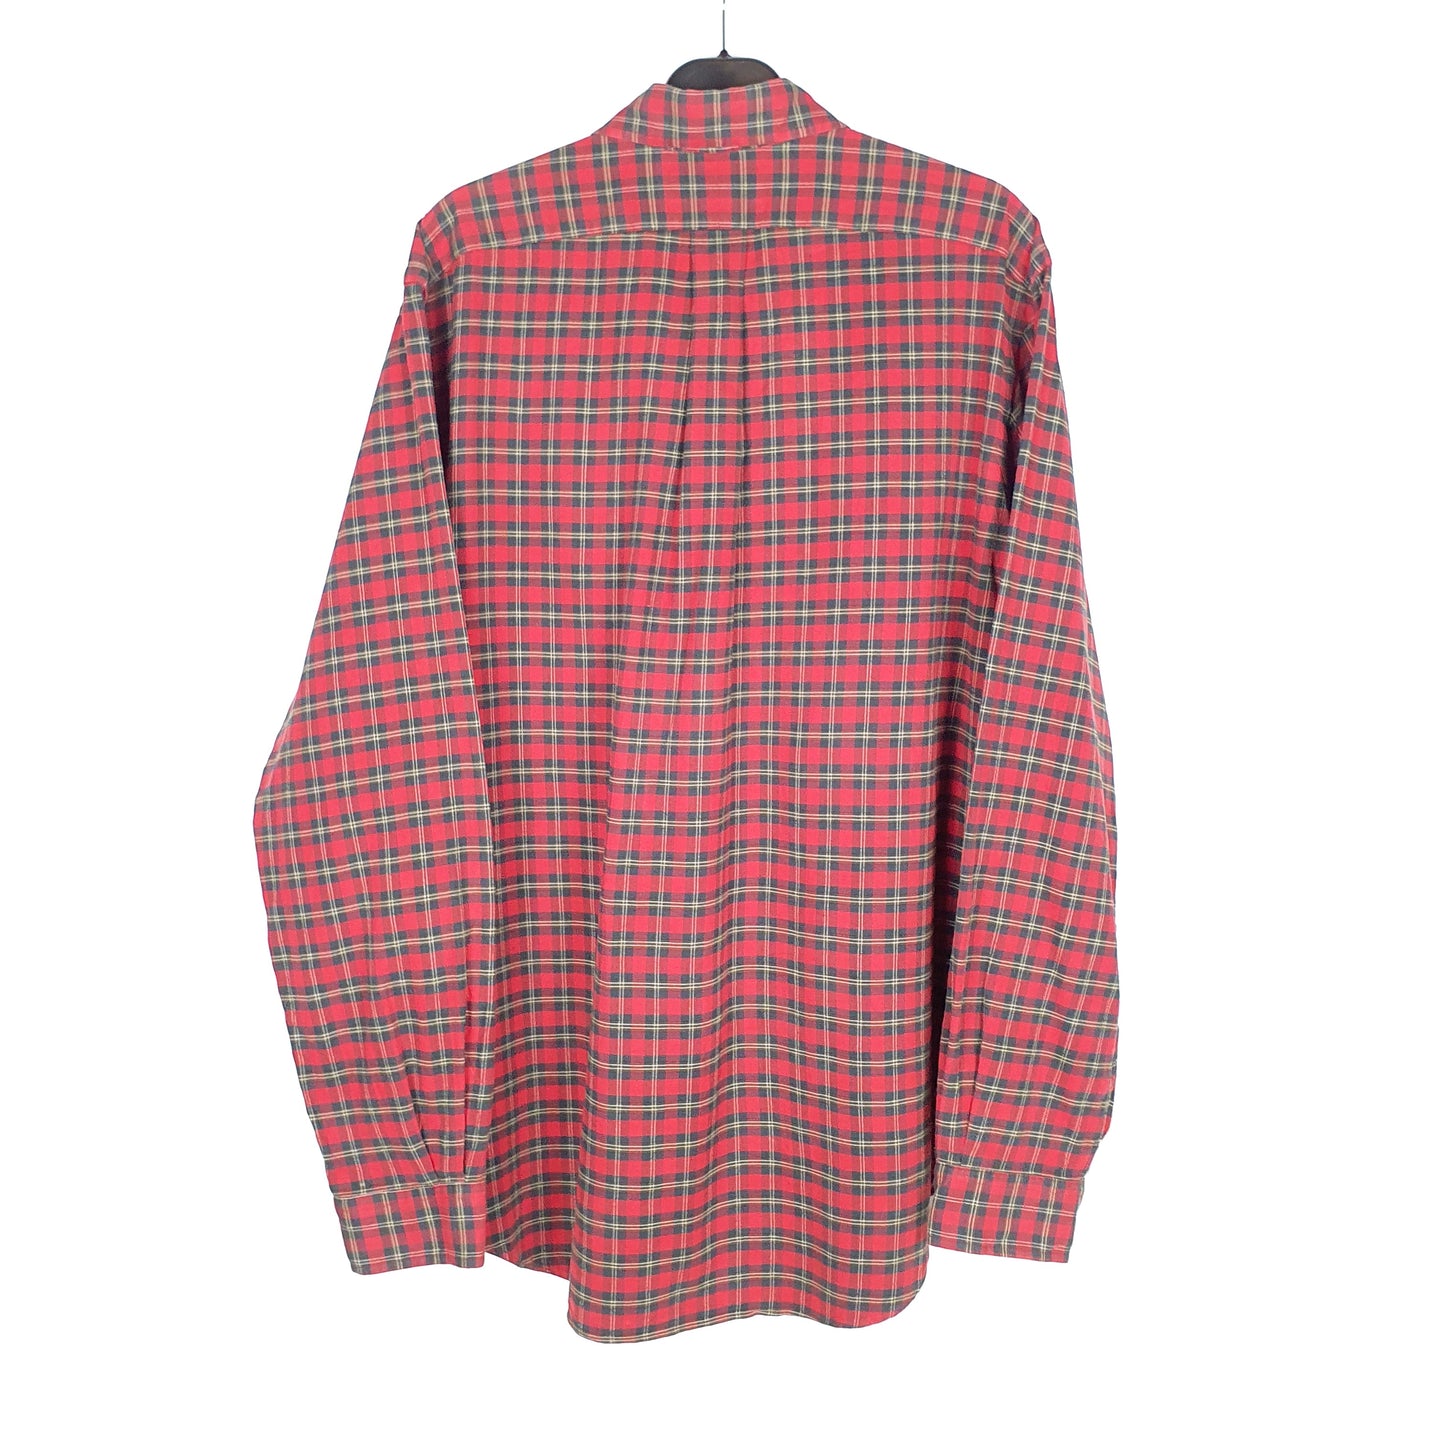 Polo Ralph Lauren Long Sleeve Classic Fit Check Shirt